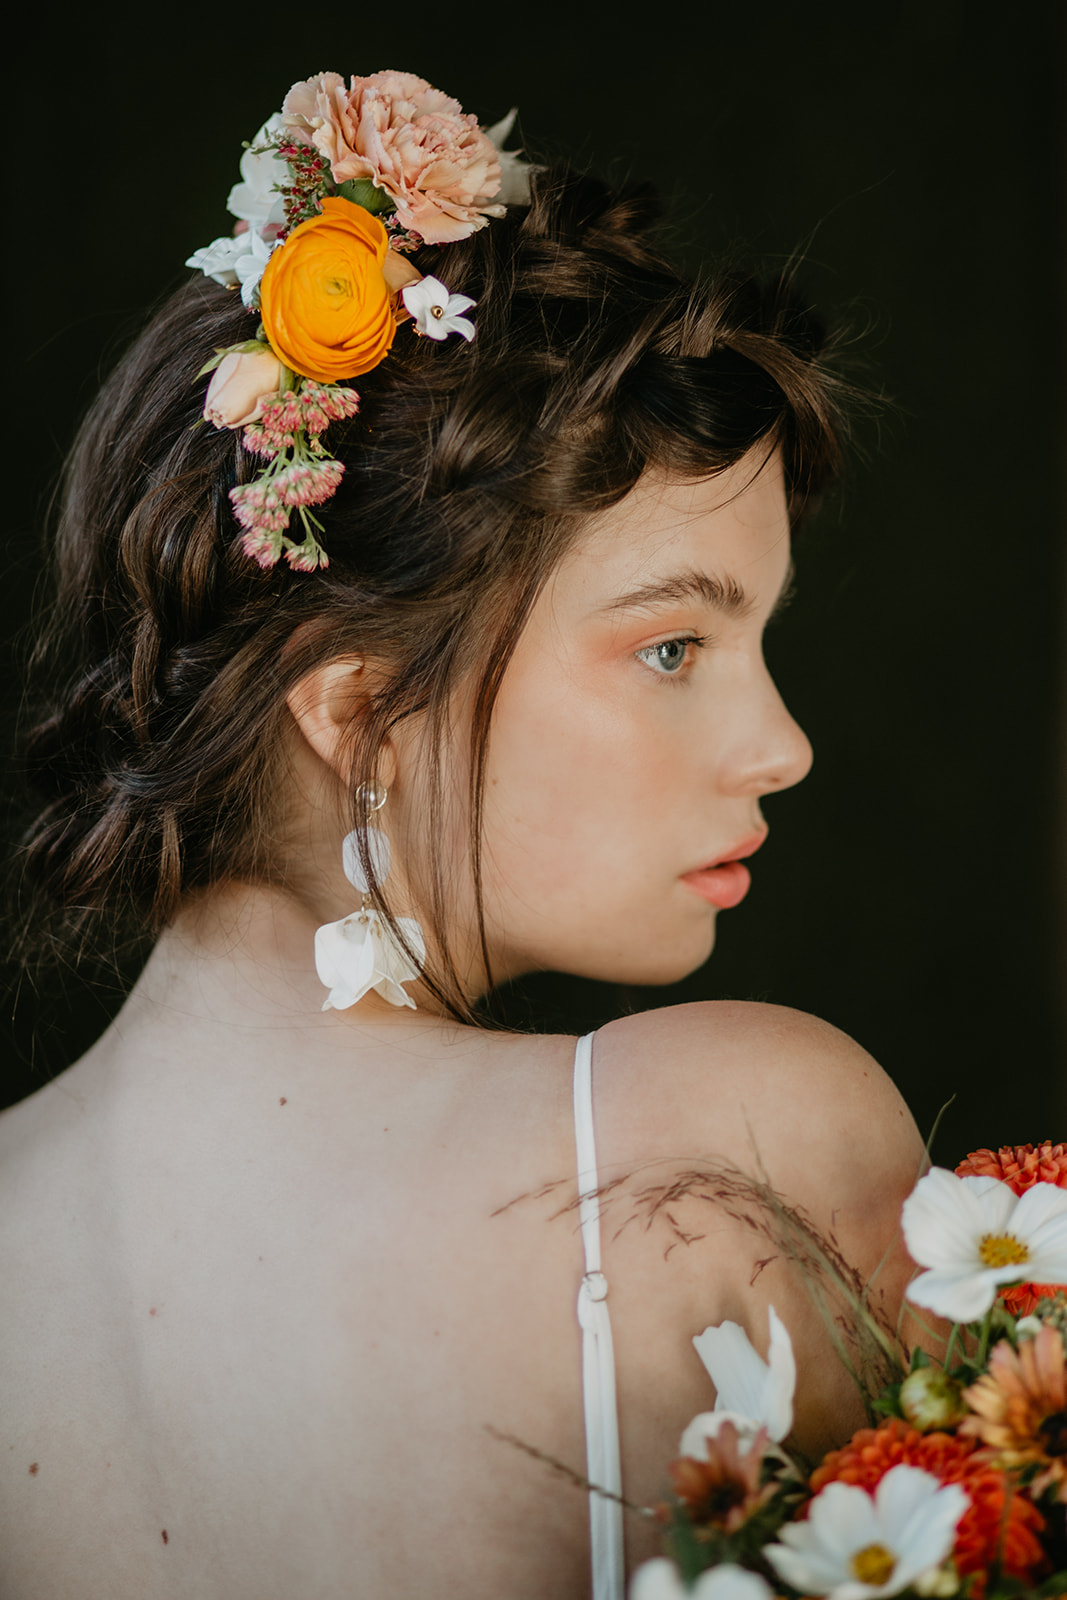 Flower crown for October wedding inspiration